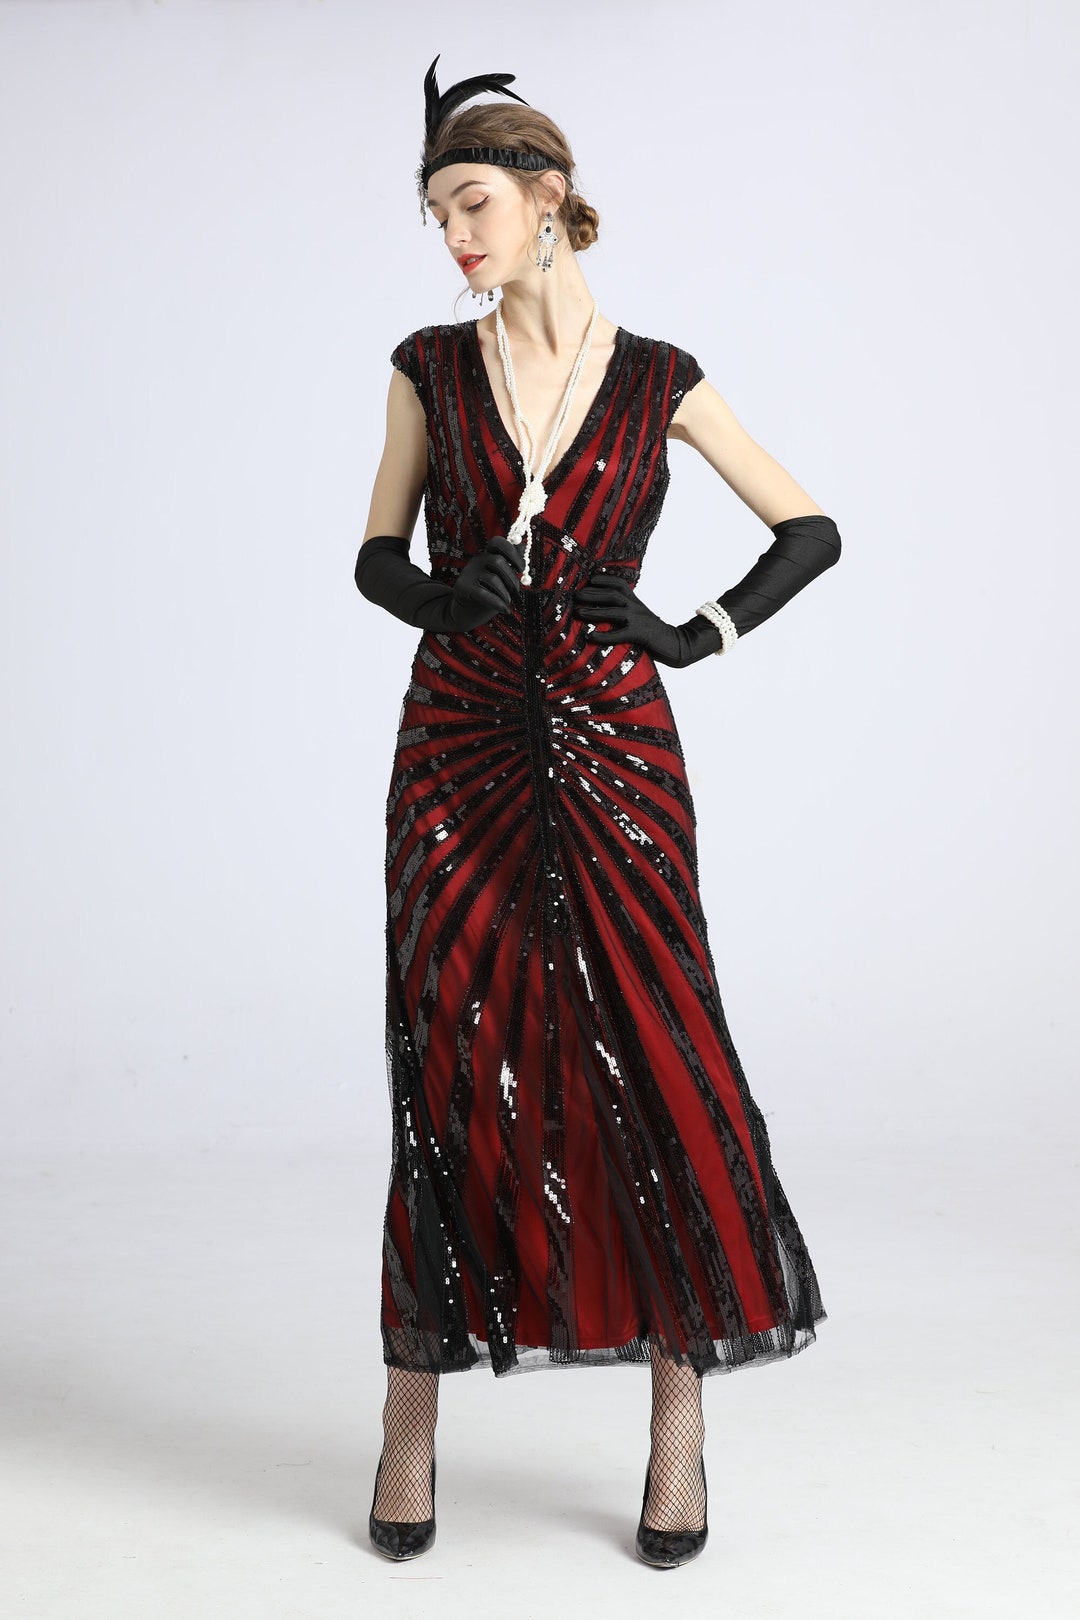 Femme 20s Black Flapper Dress Gatsby Fancy Dress Costume